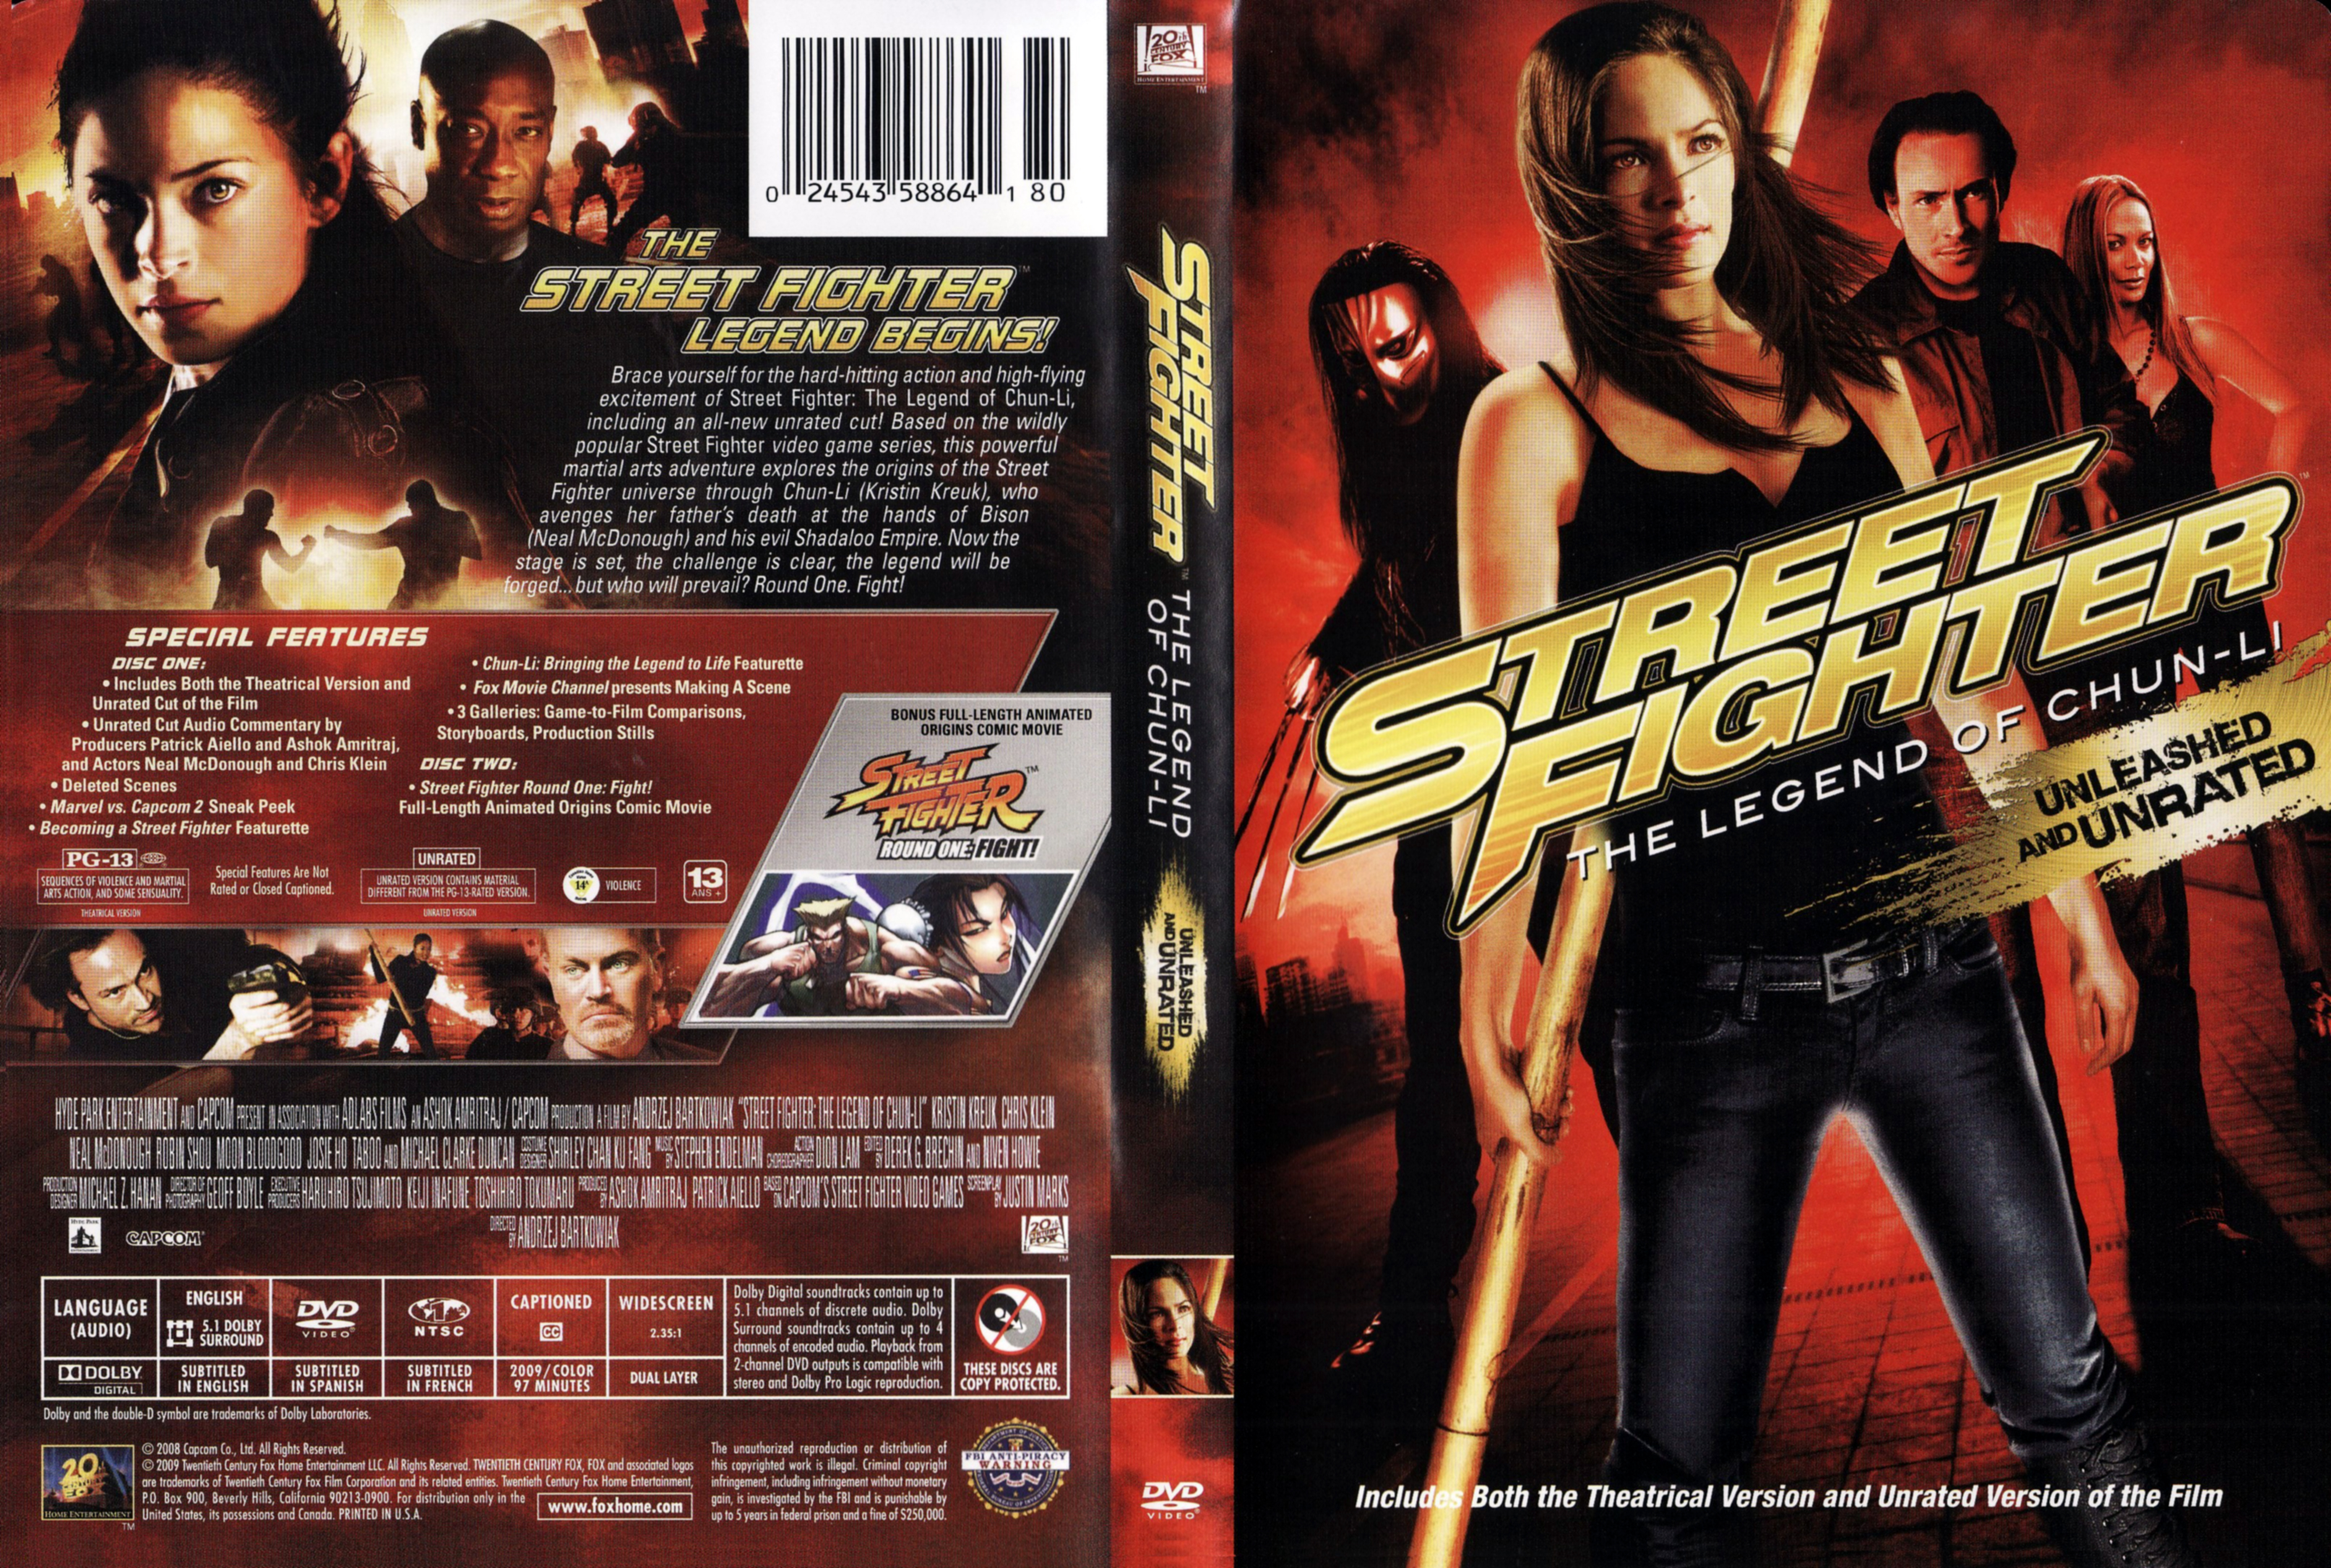 Jaquette DVD Street Fighter The legend of Chun-Li Zone 1